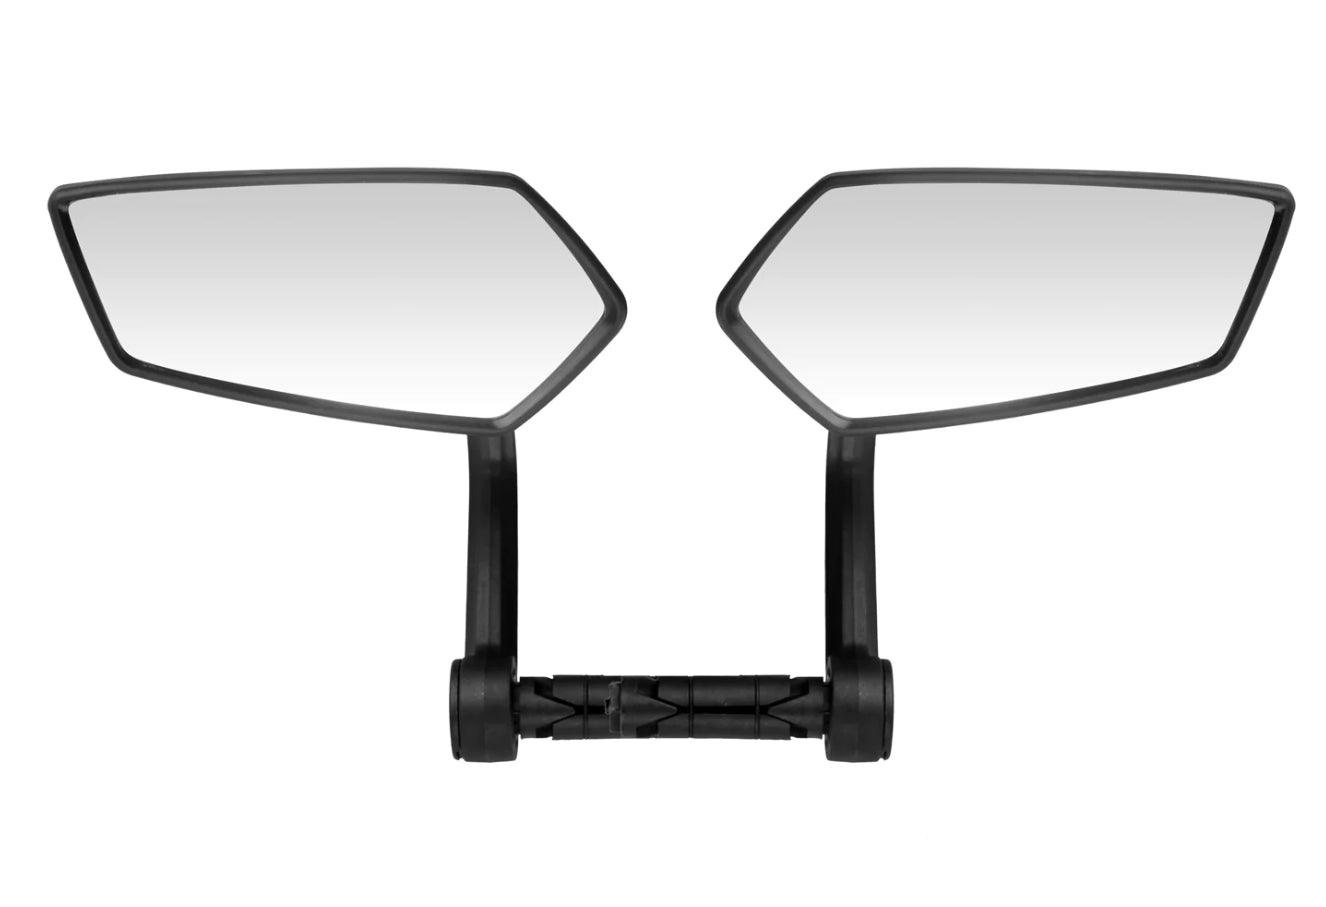 Himiway Anti-shake Rear-view Mirror (one pair)